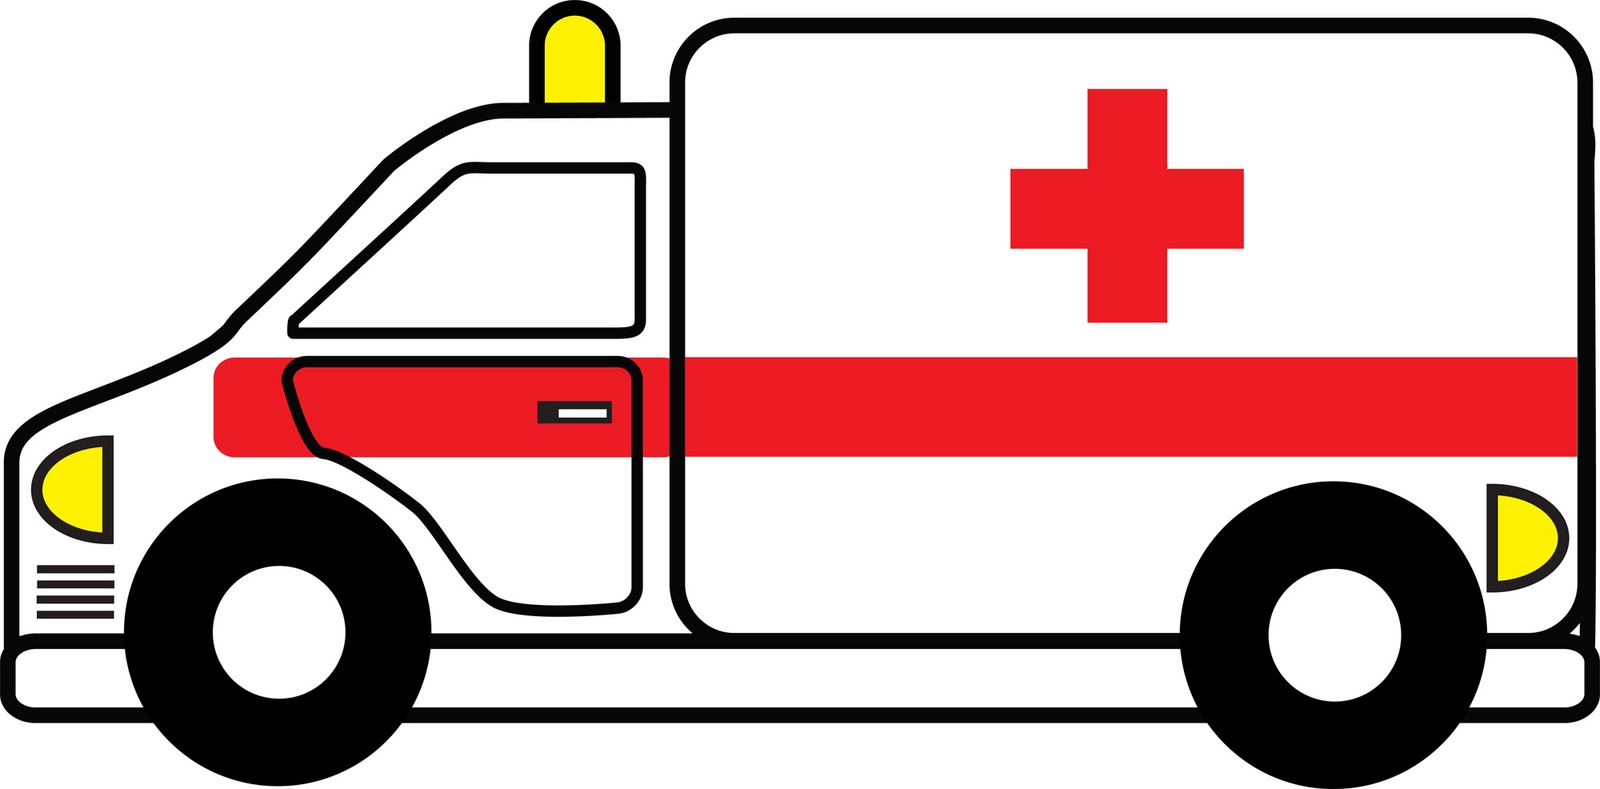 ambulance clipart - Ambulance Clip Art